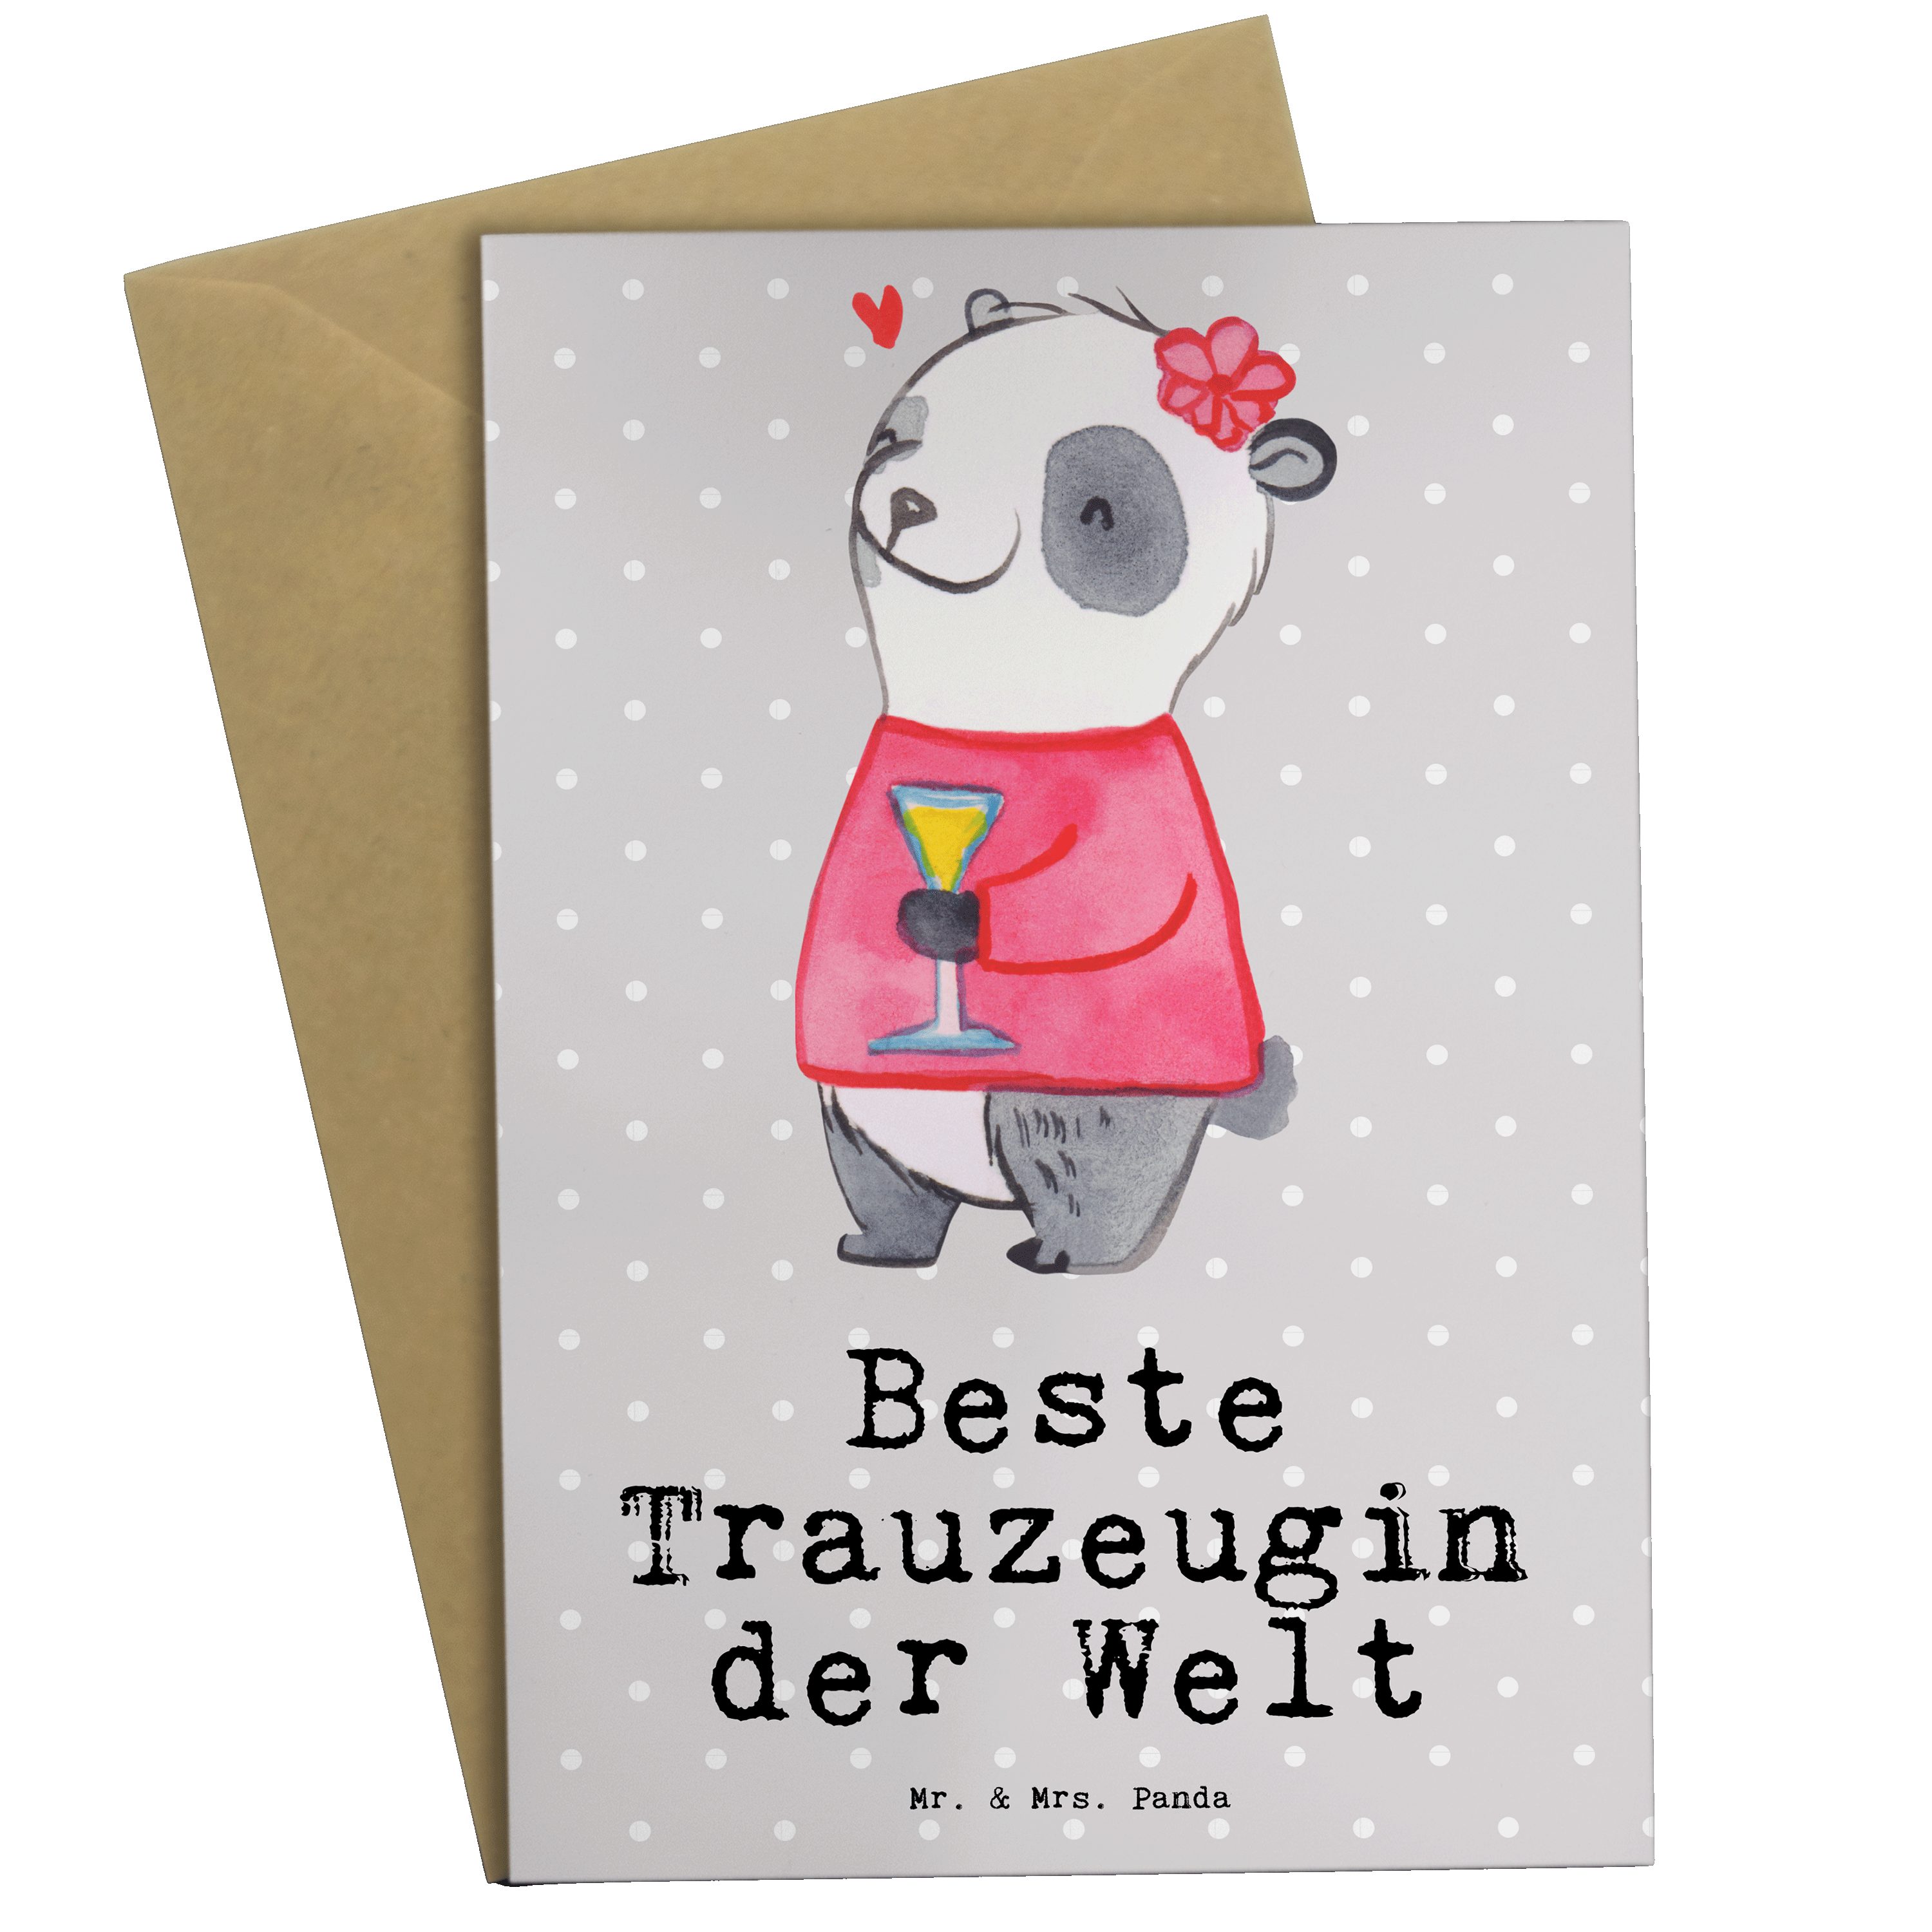 Mr. & Mrs. Panda Grußkarte Panda Beste Trauzeugin der Welt - Grau Pastell - Geschenk, Freude mac